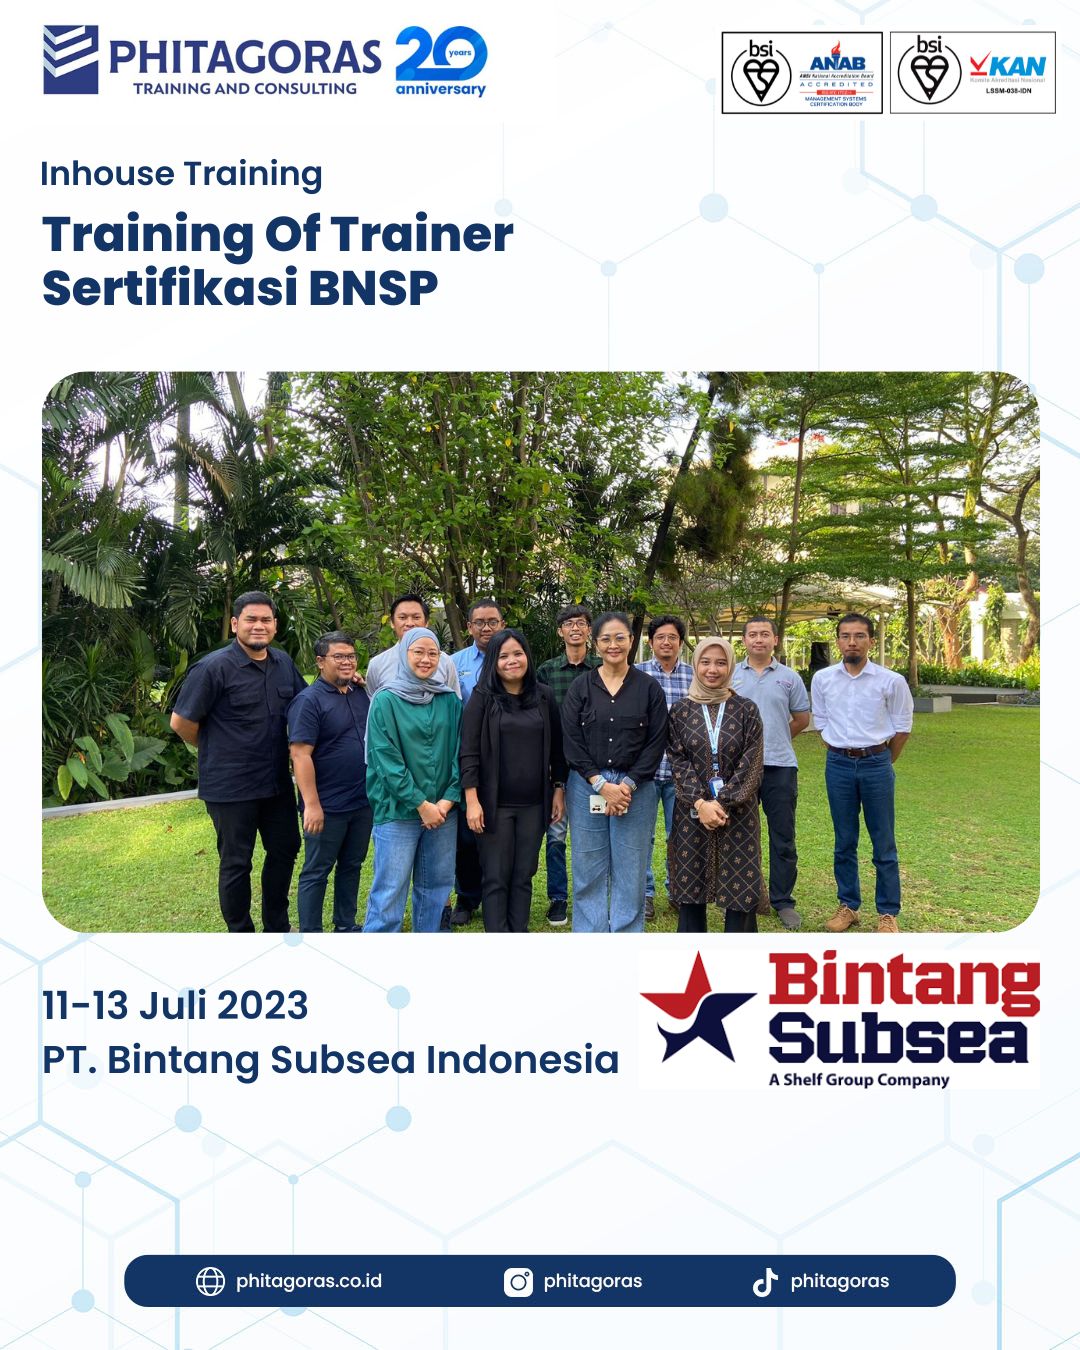 Inhouse Training Training Of Trainer Sertifikasi BNSP - PT. Bintang Subsea Indonesia